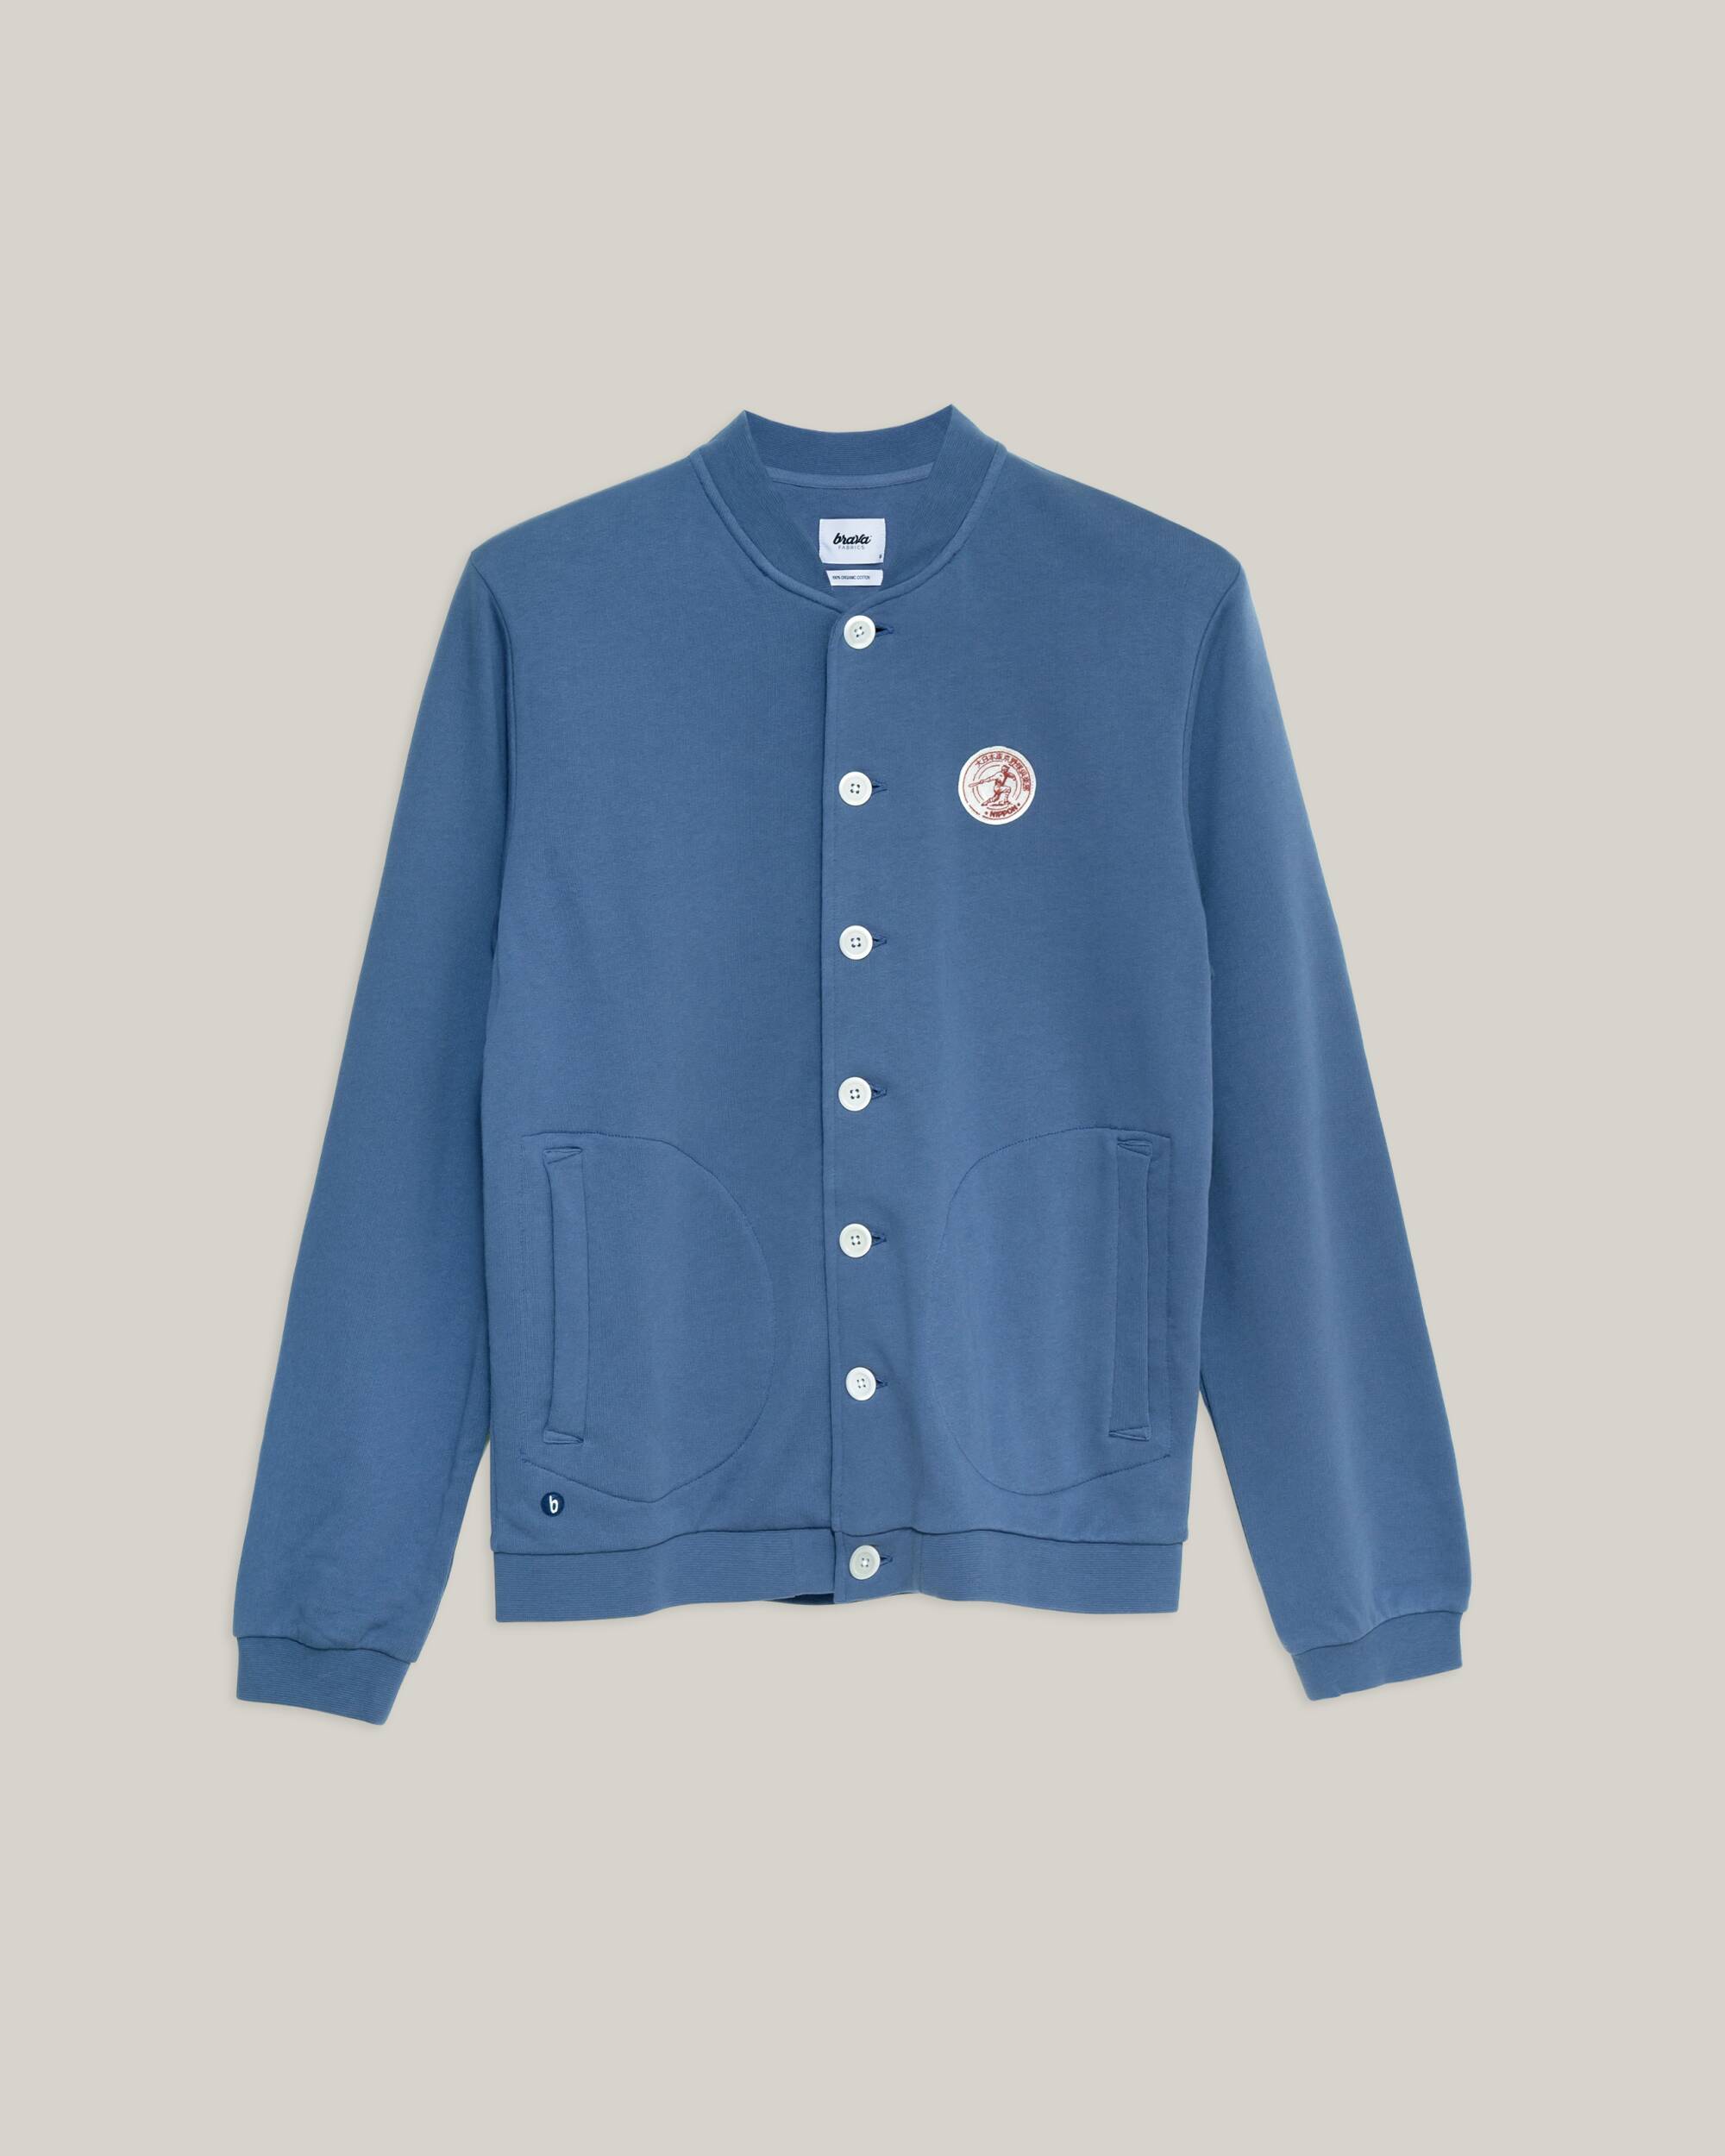 Blue Tokyo Baseball Club jacket made from 100% organic cotton by Brava Fabrics